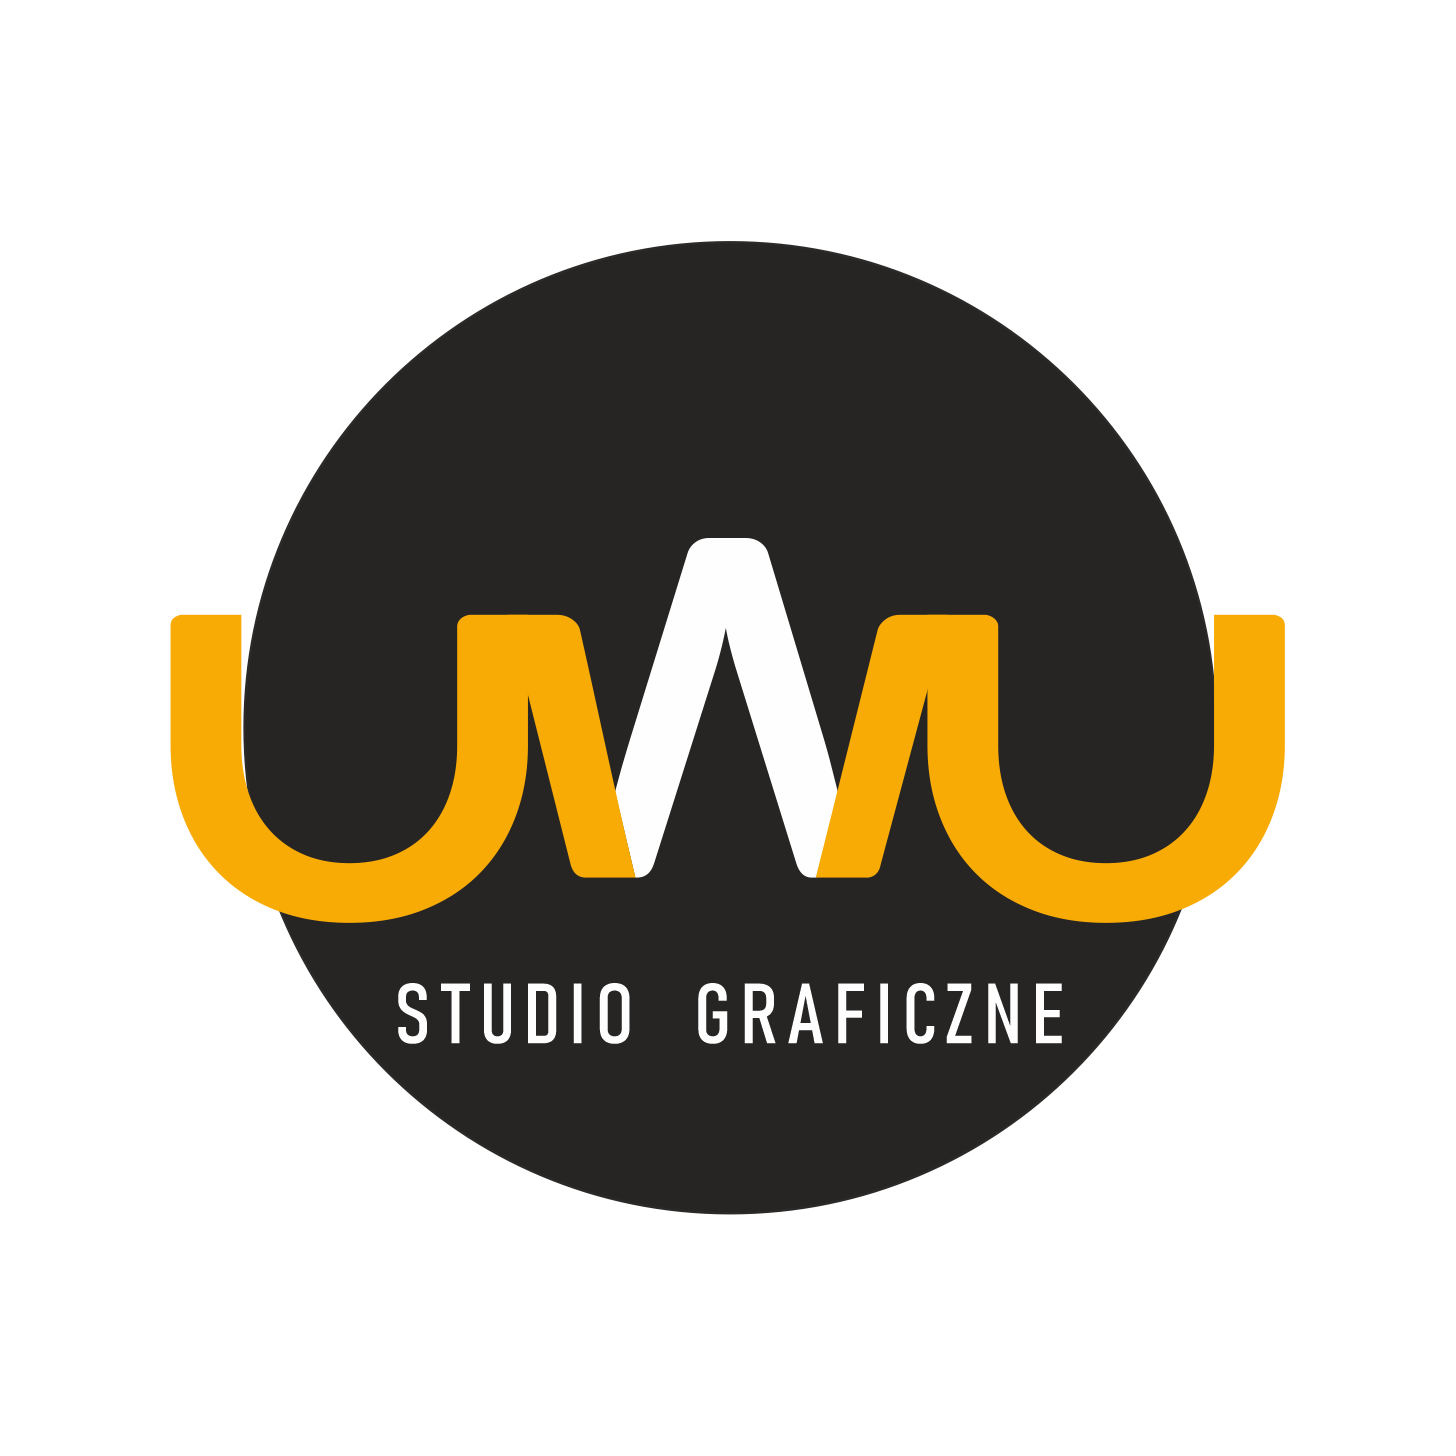 uWu_Studio